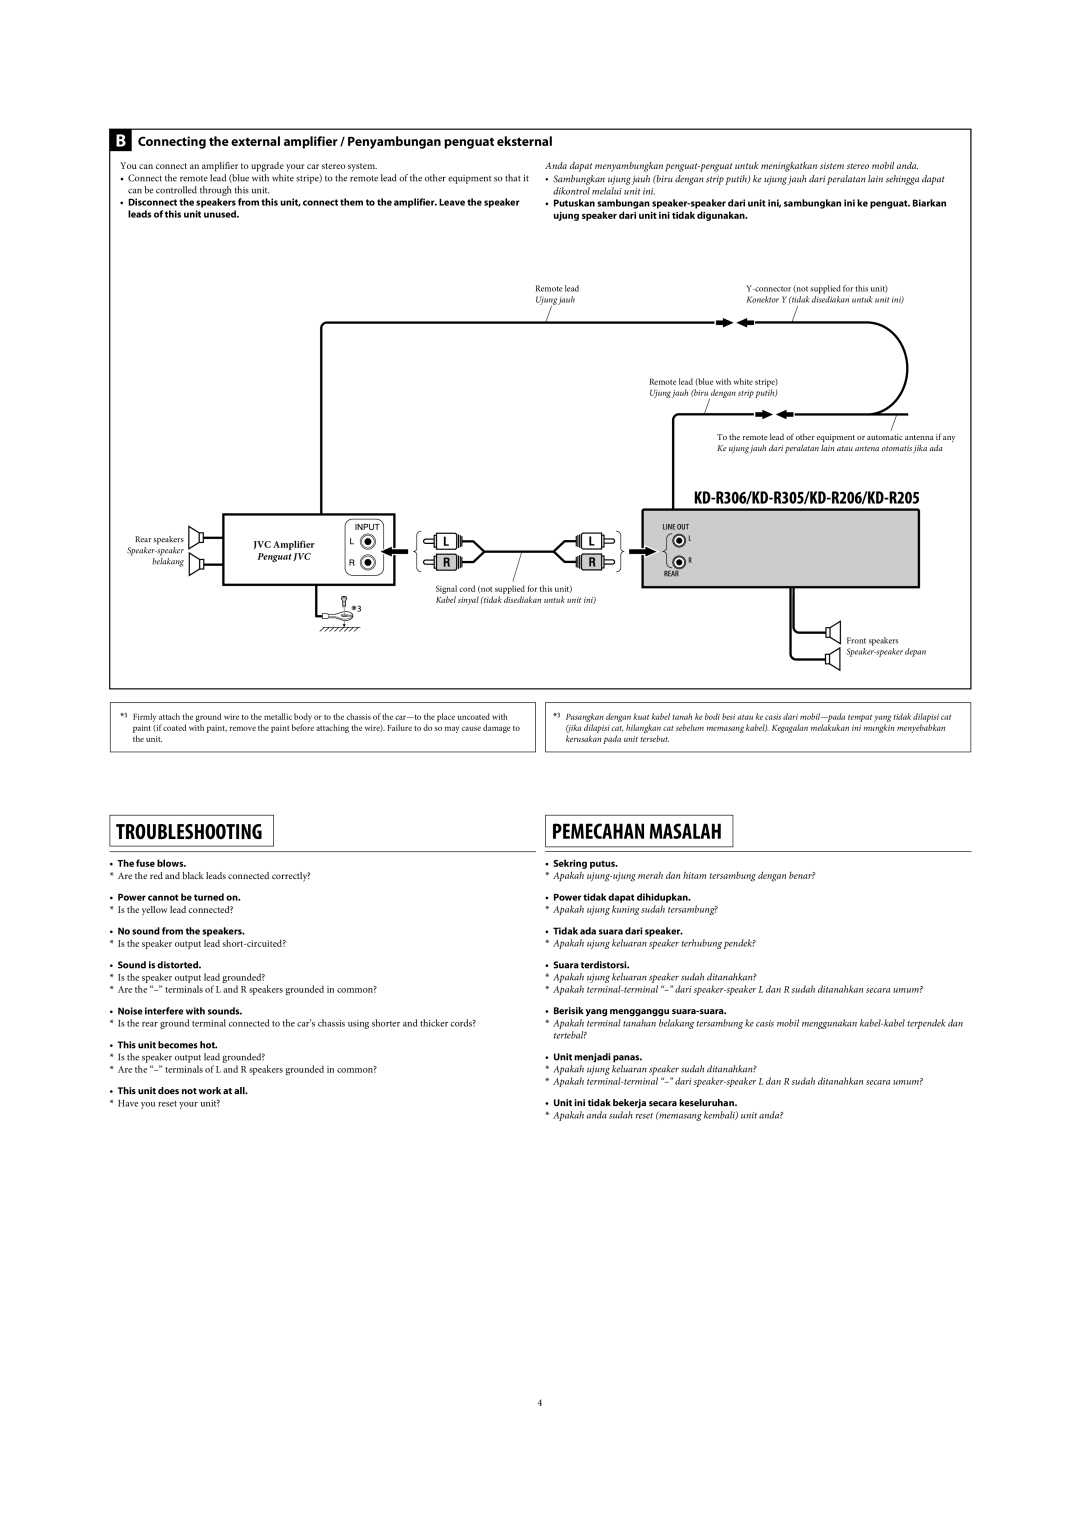 JVC KD-R302 manual Troubleshooting, Pemecahan Masalah, B Connecting the external amplifier / Penyambungan penguat eksternal 